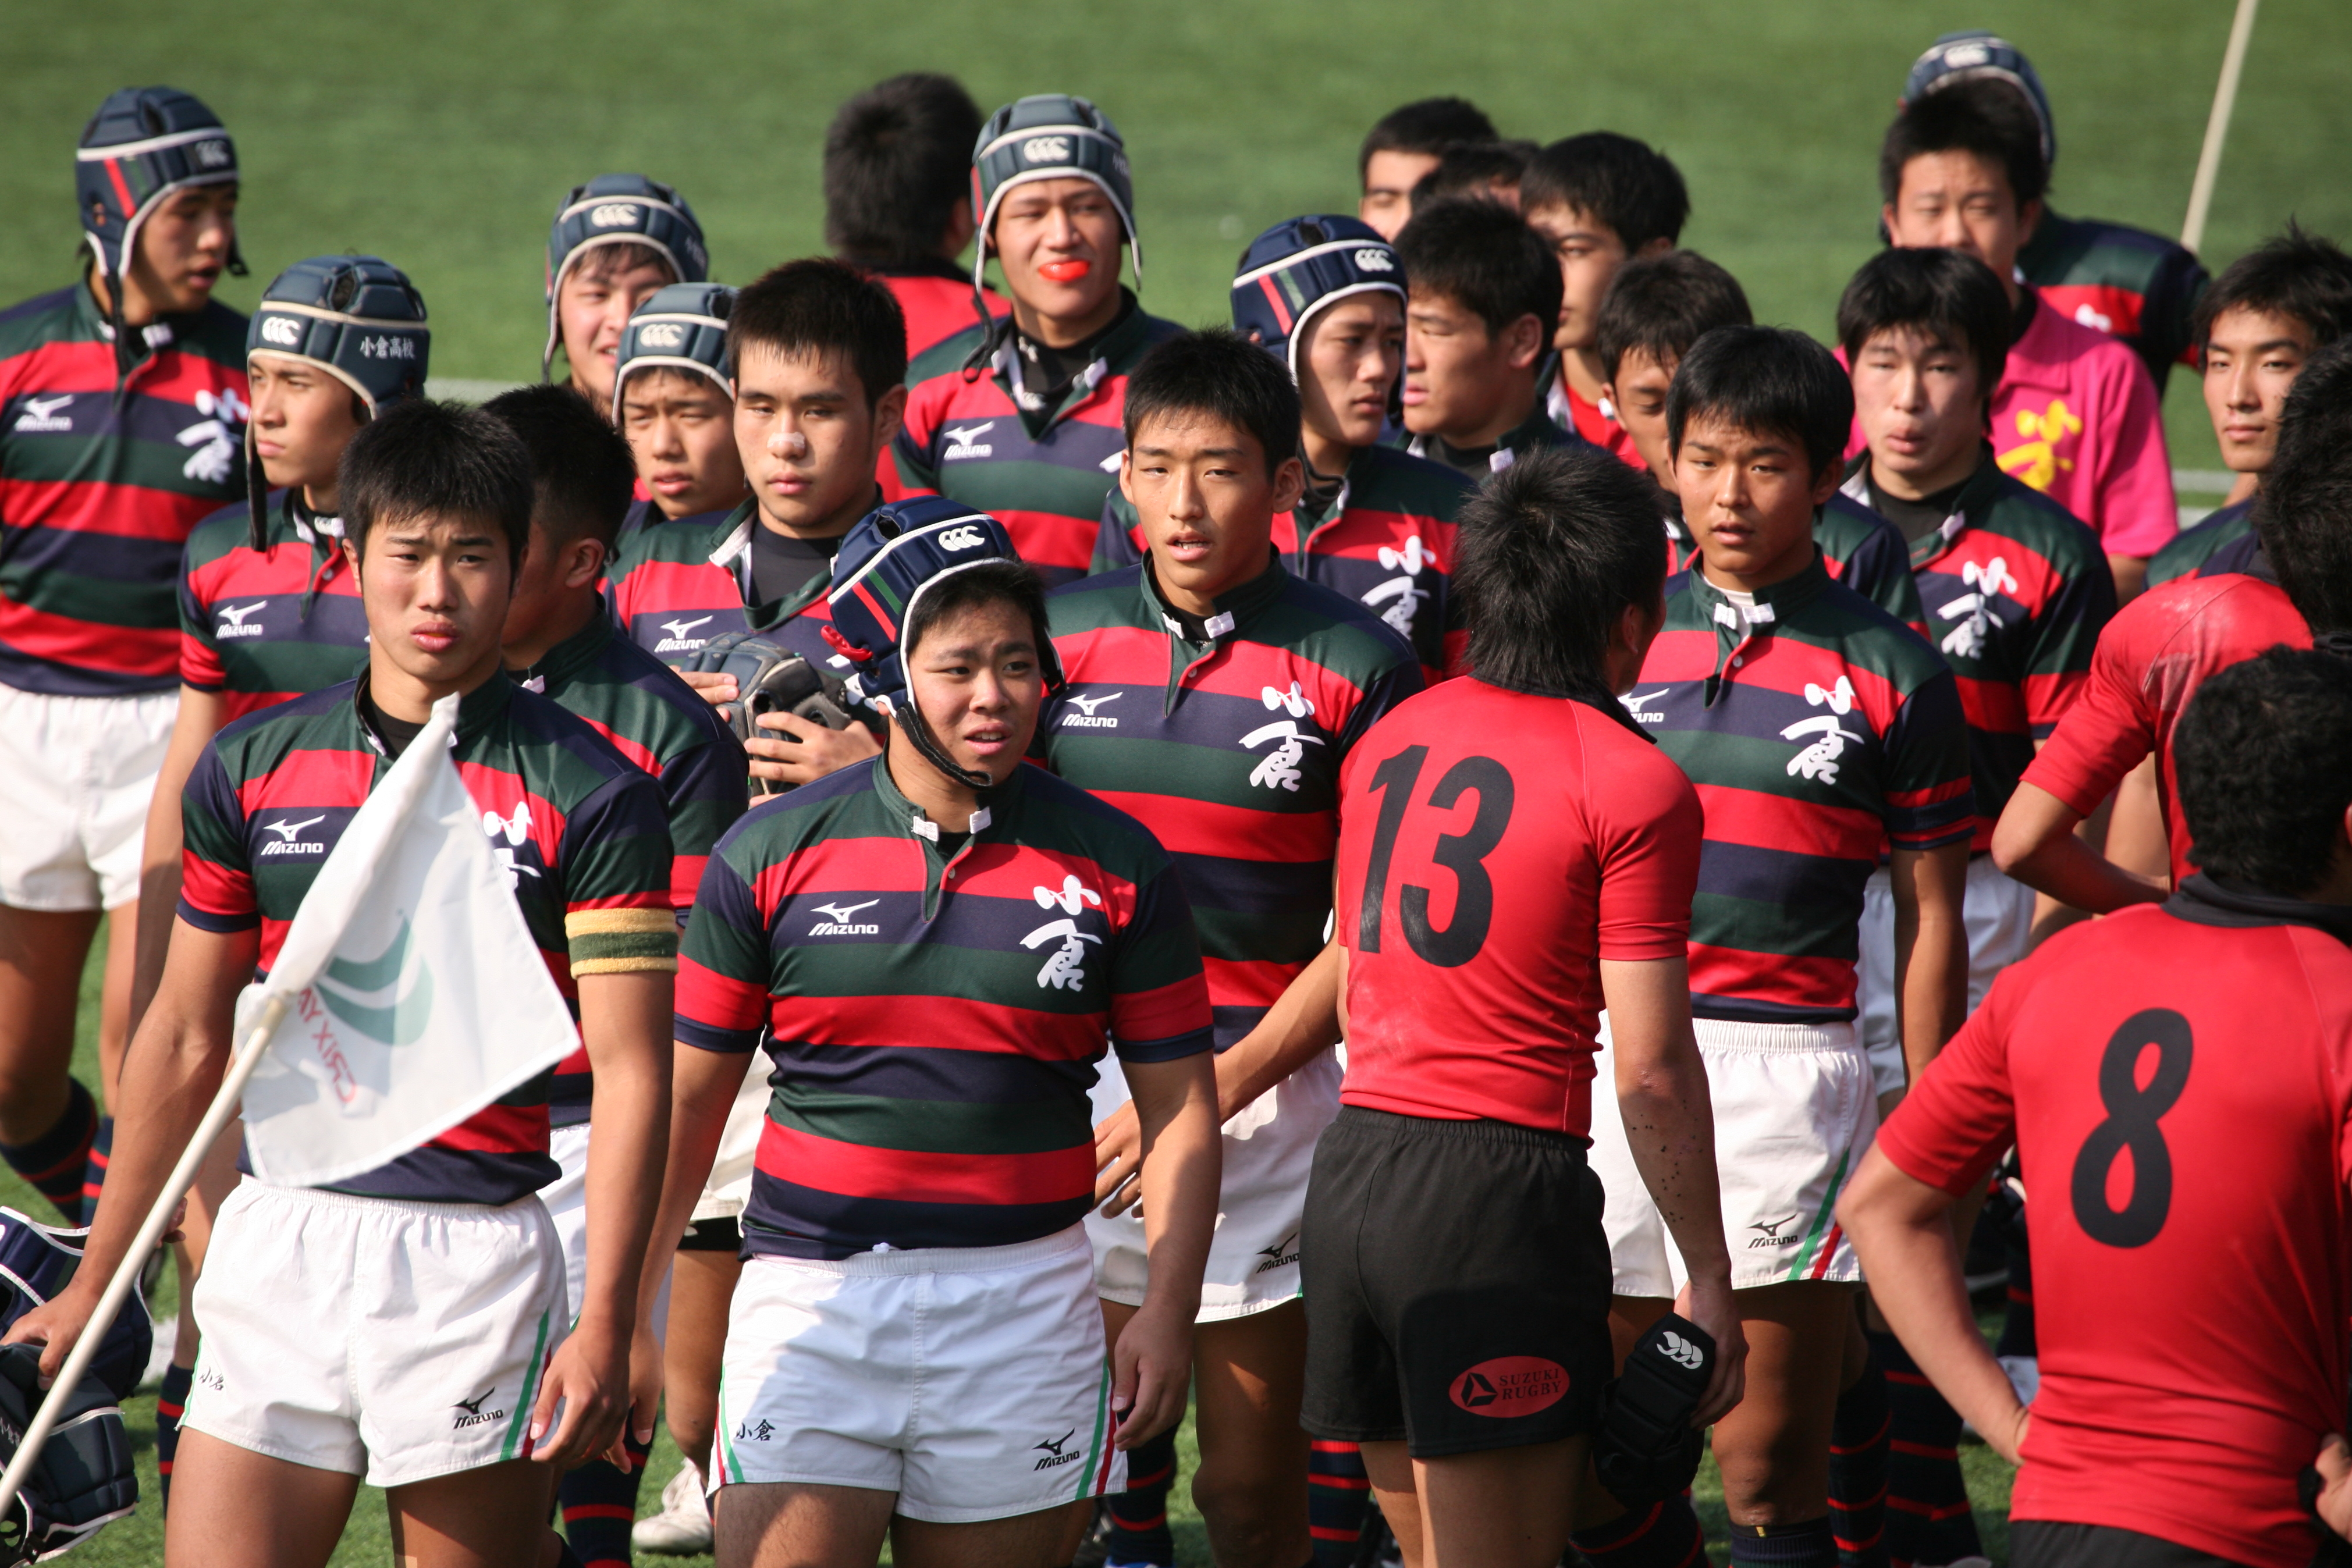 http://kokura-rugby.sakura.ne.jp/2010.11.7-1.JPG